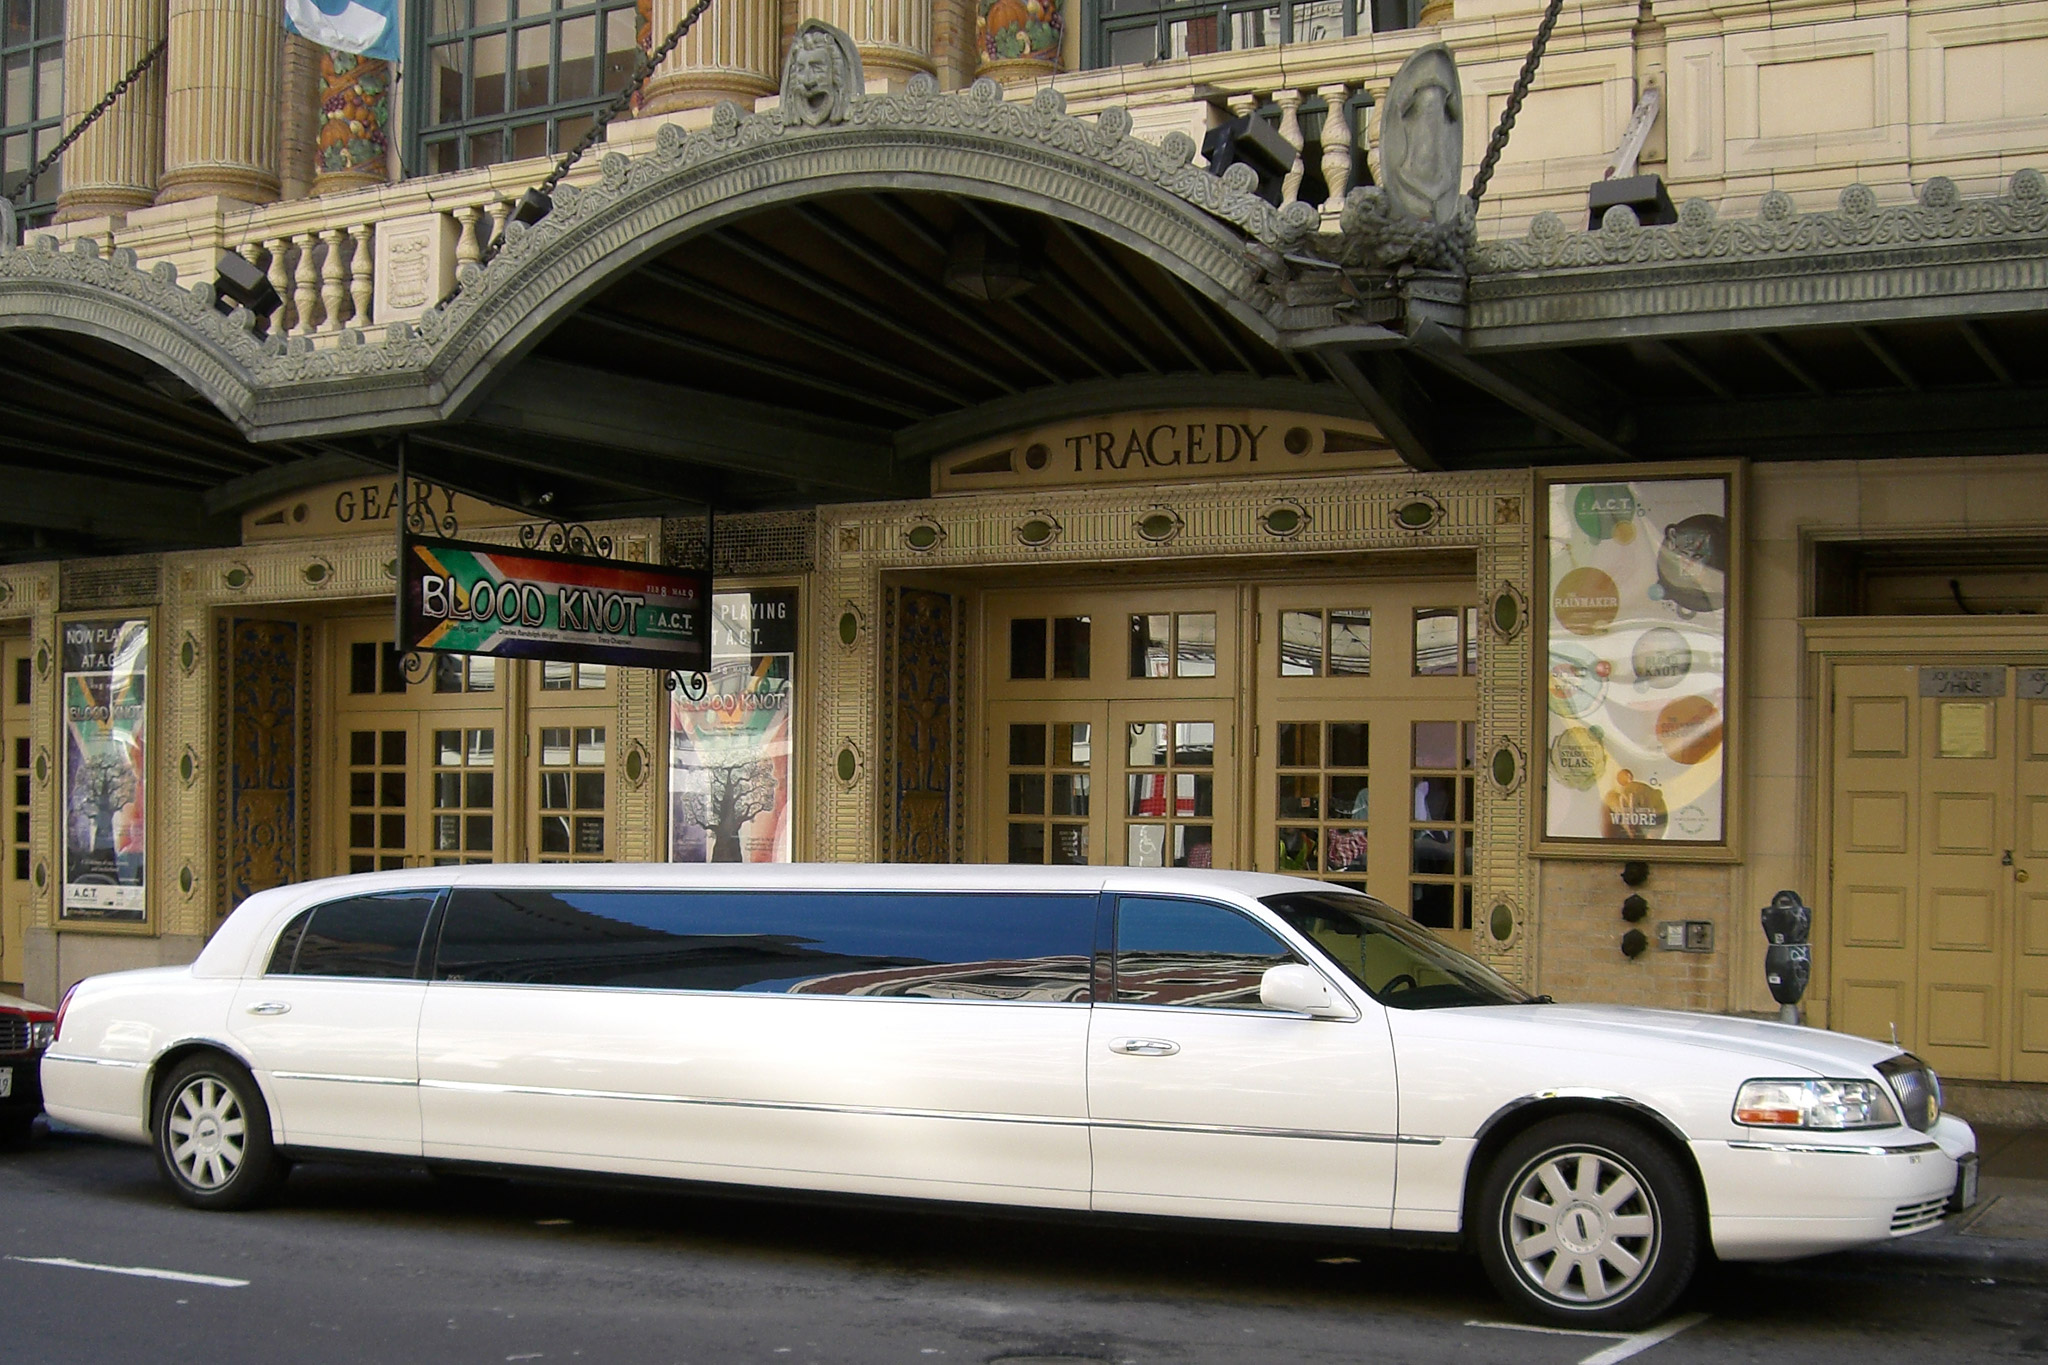 Limousine - Foto https://commons.wikimedia.org/wiki/File:White_limousine.jpg